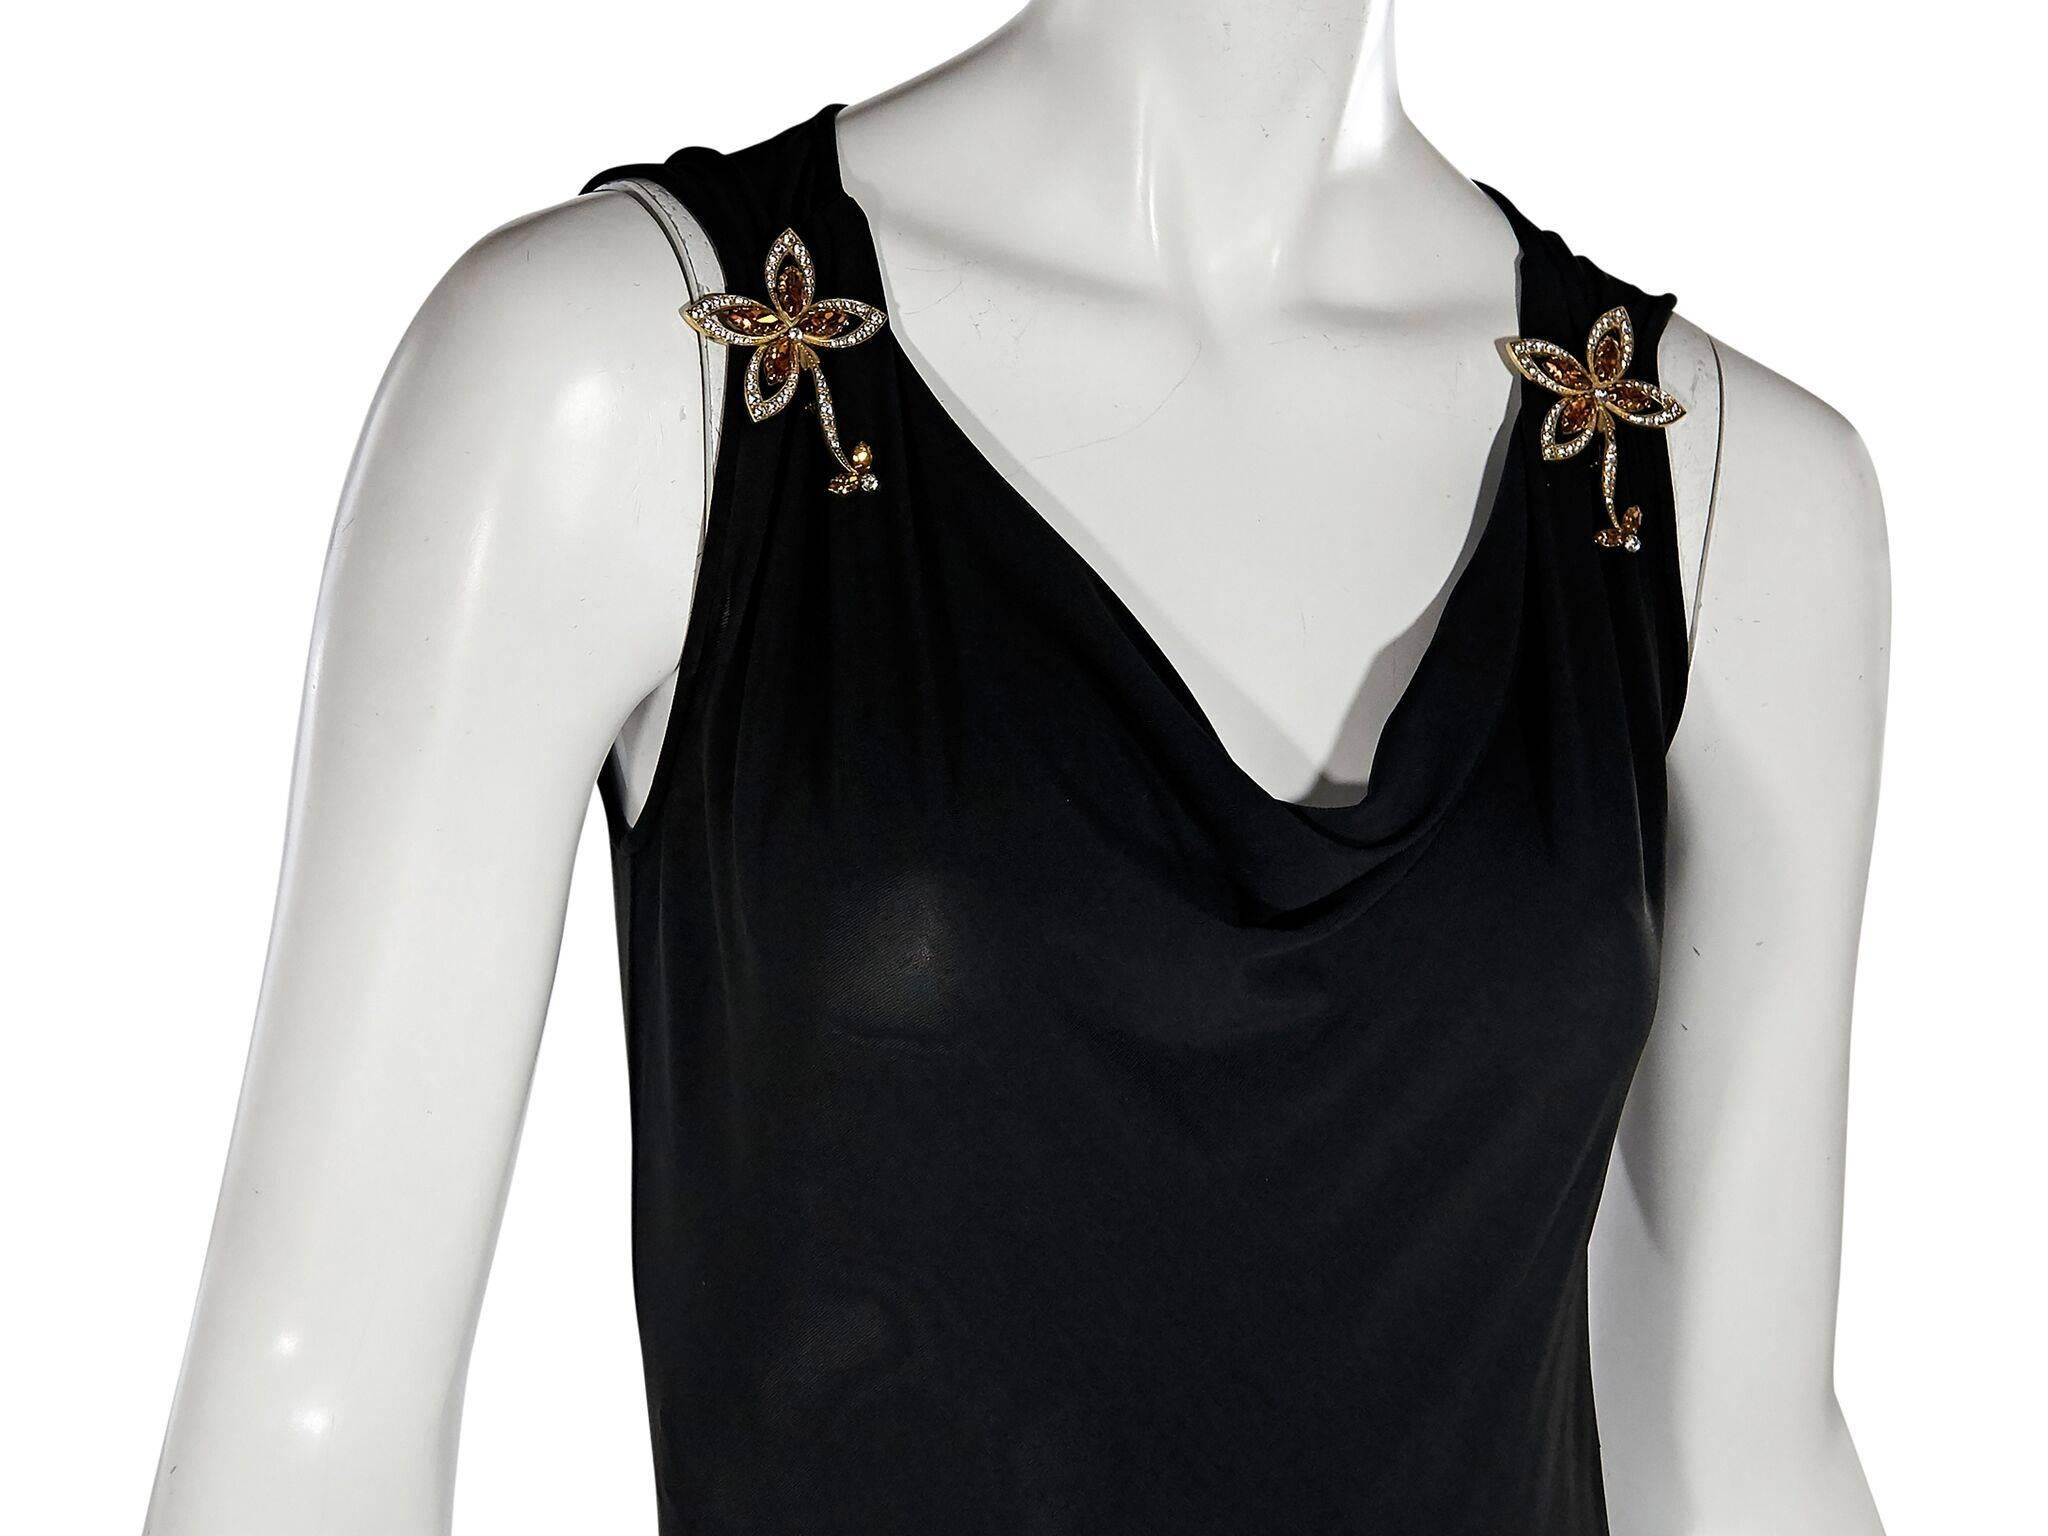 Product details:  Black knee-length dress by Dolce & Gabbana.  V-neck.  Sleeveless.  Goldtone brooches accent shoulder straps.  Concealed back zip closure.  34